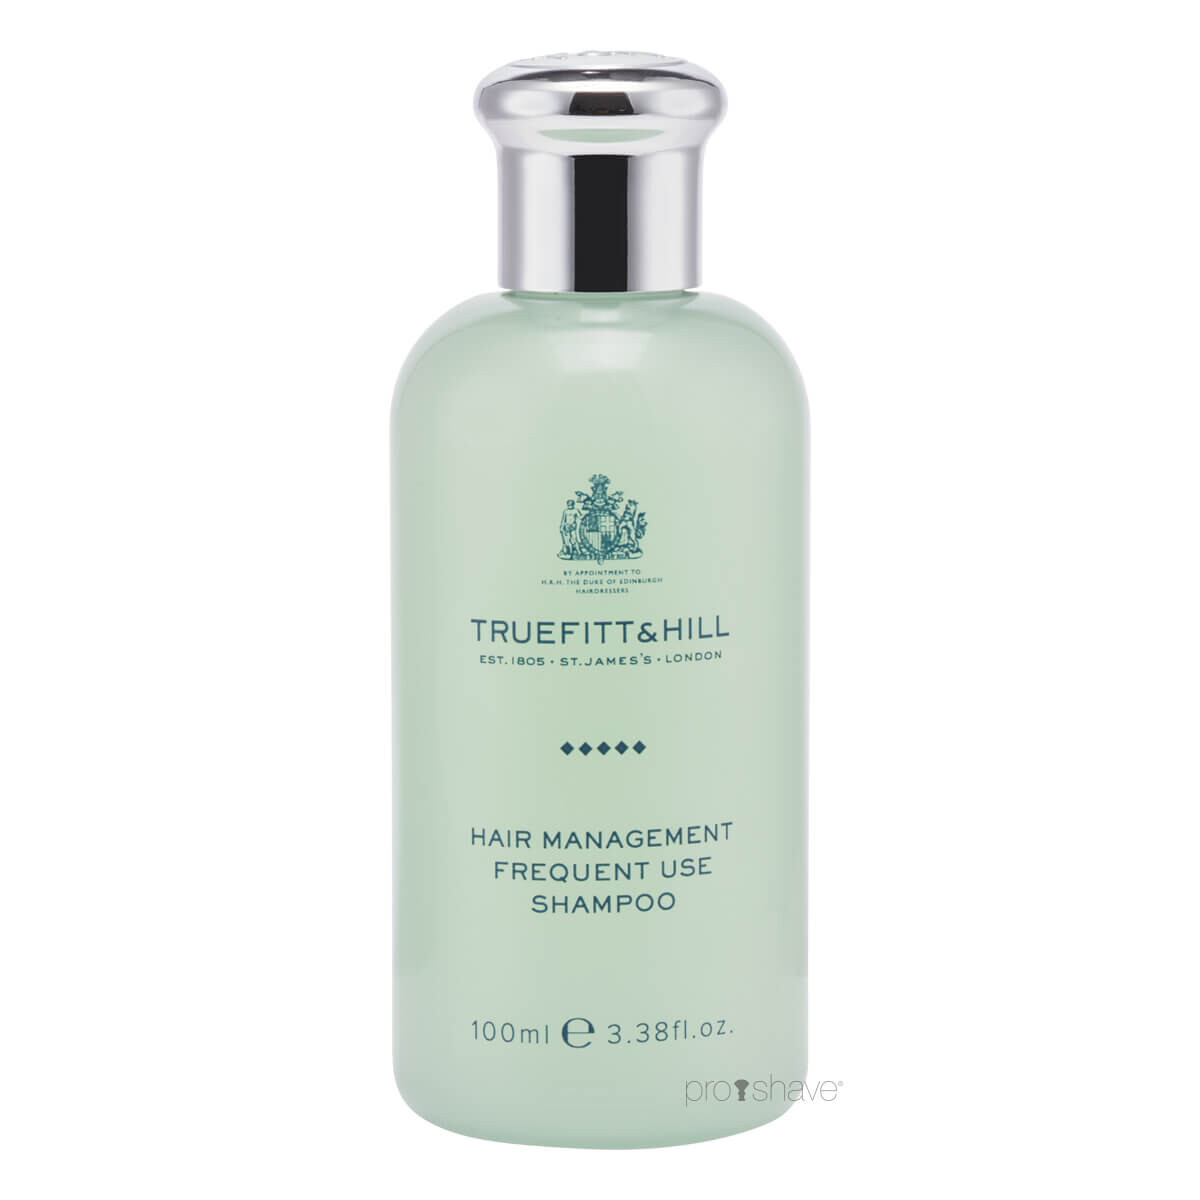 6: Truefitt & Hill Frequent Use Shampoo, 100 ml.